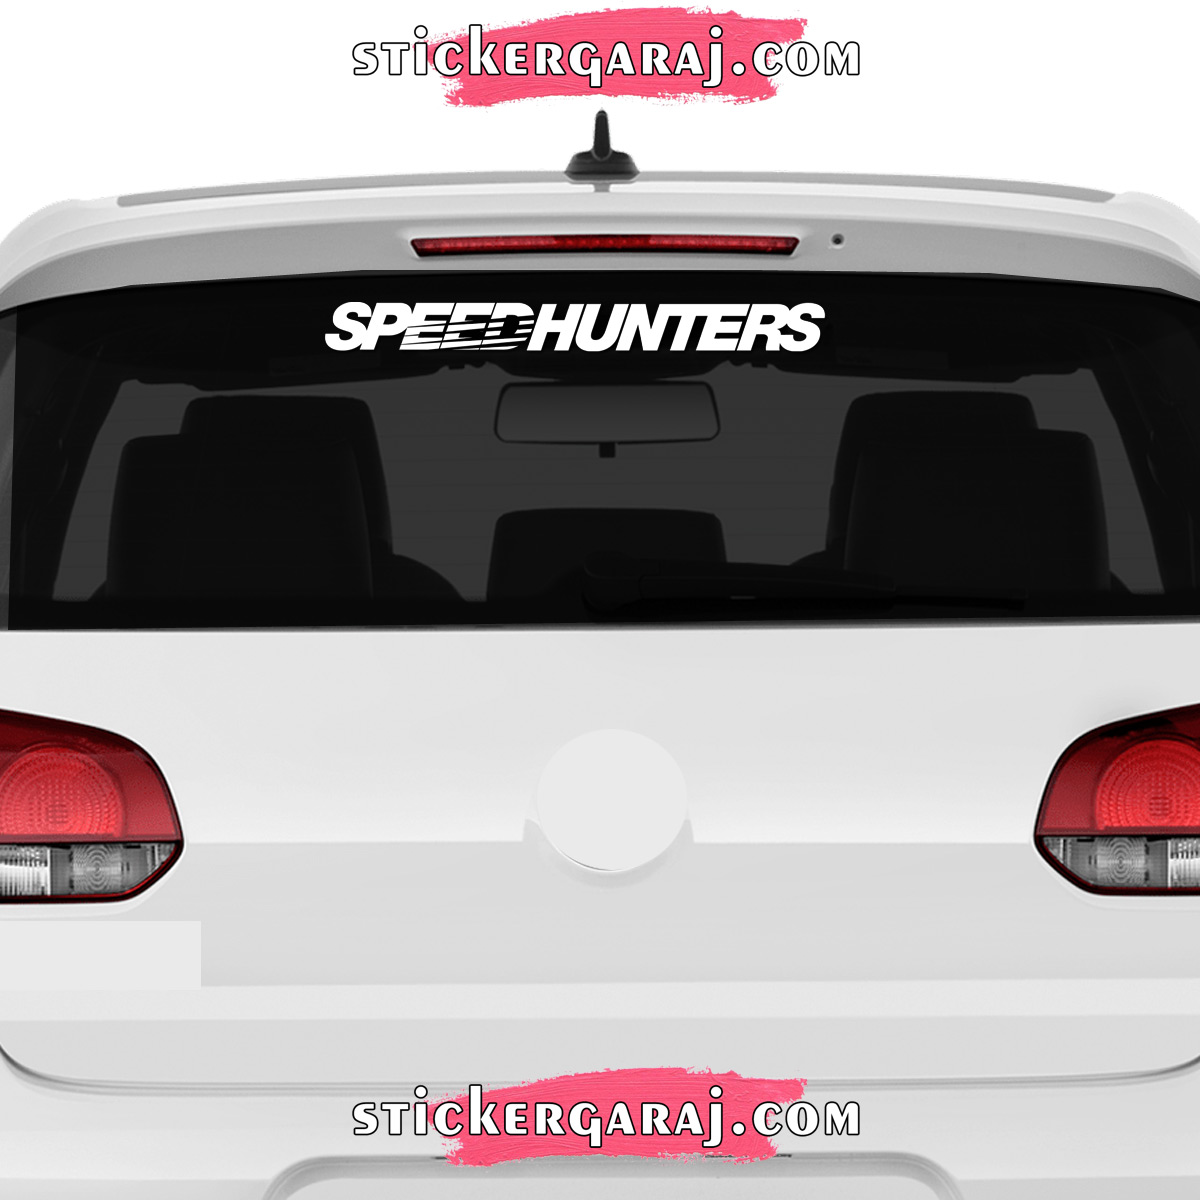 Audi cam sticker - Audi cam sticker - speedhunters